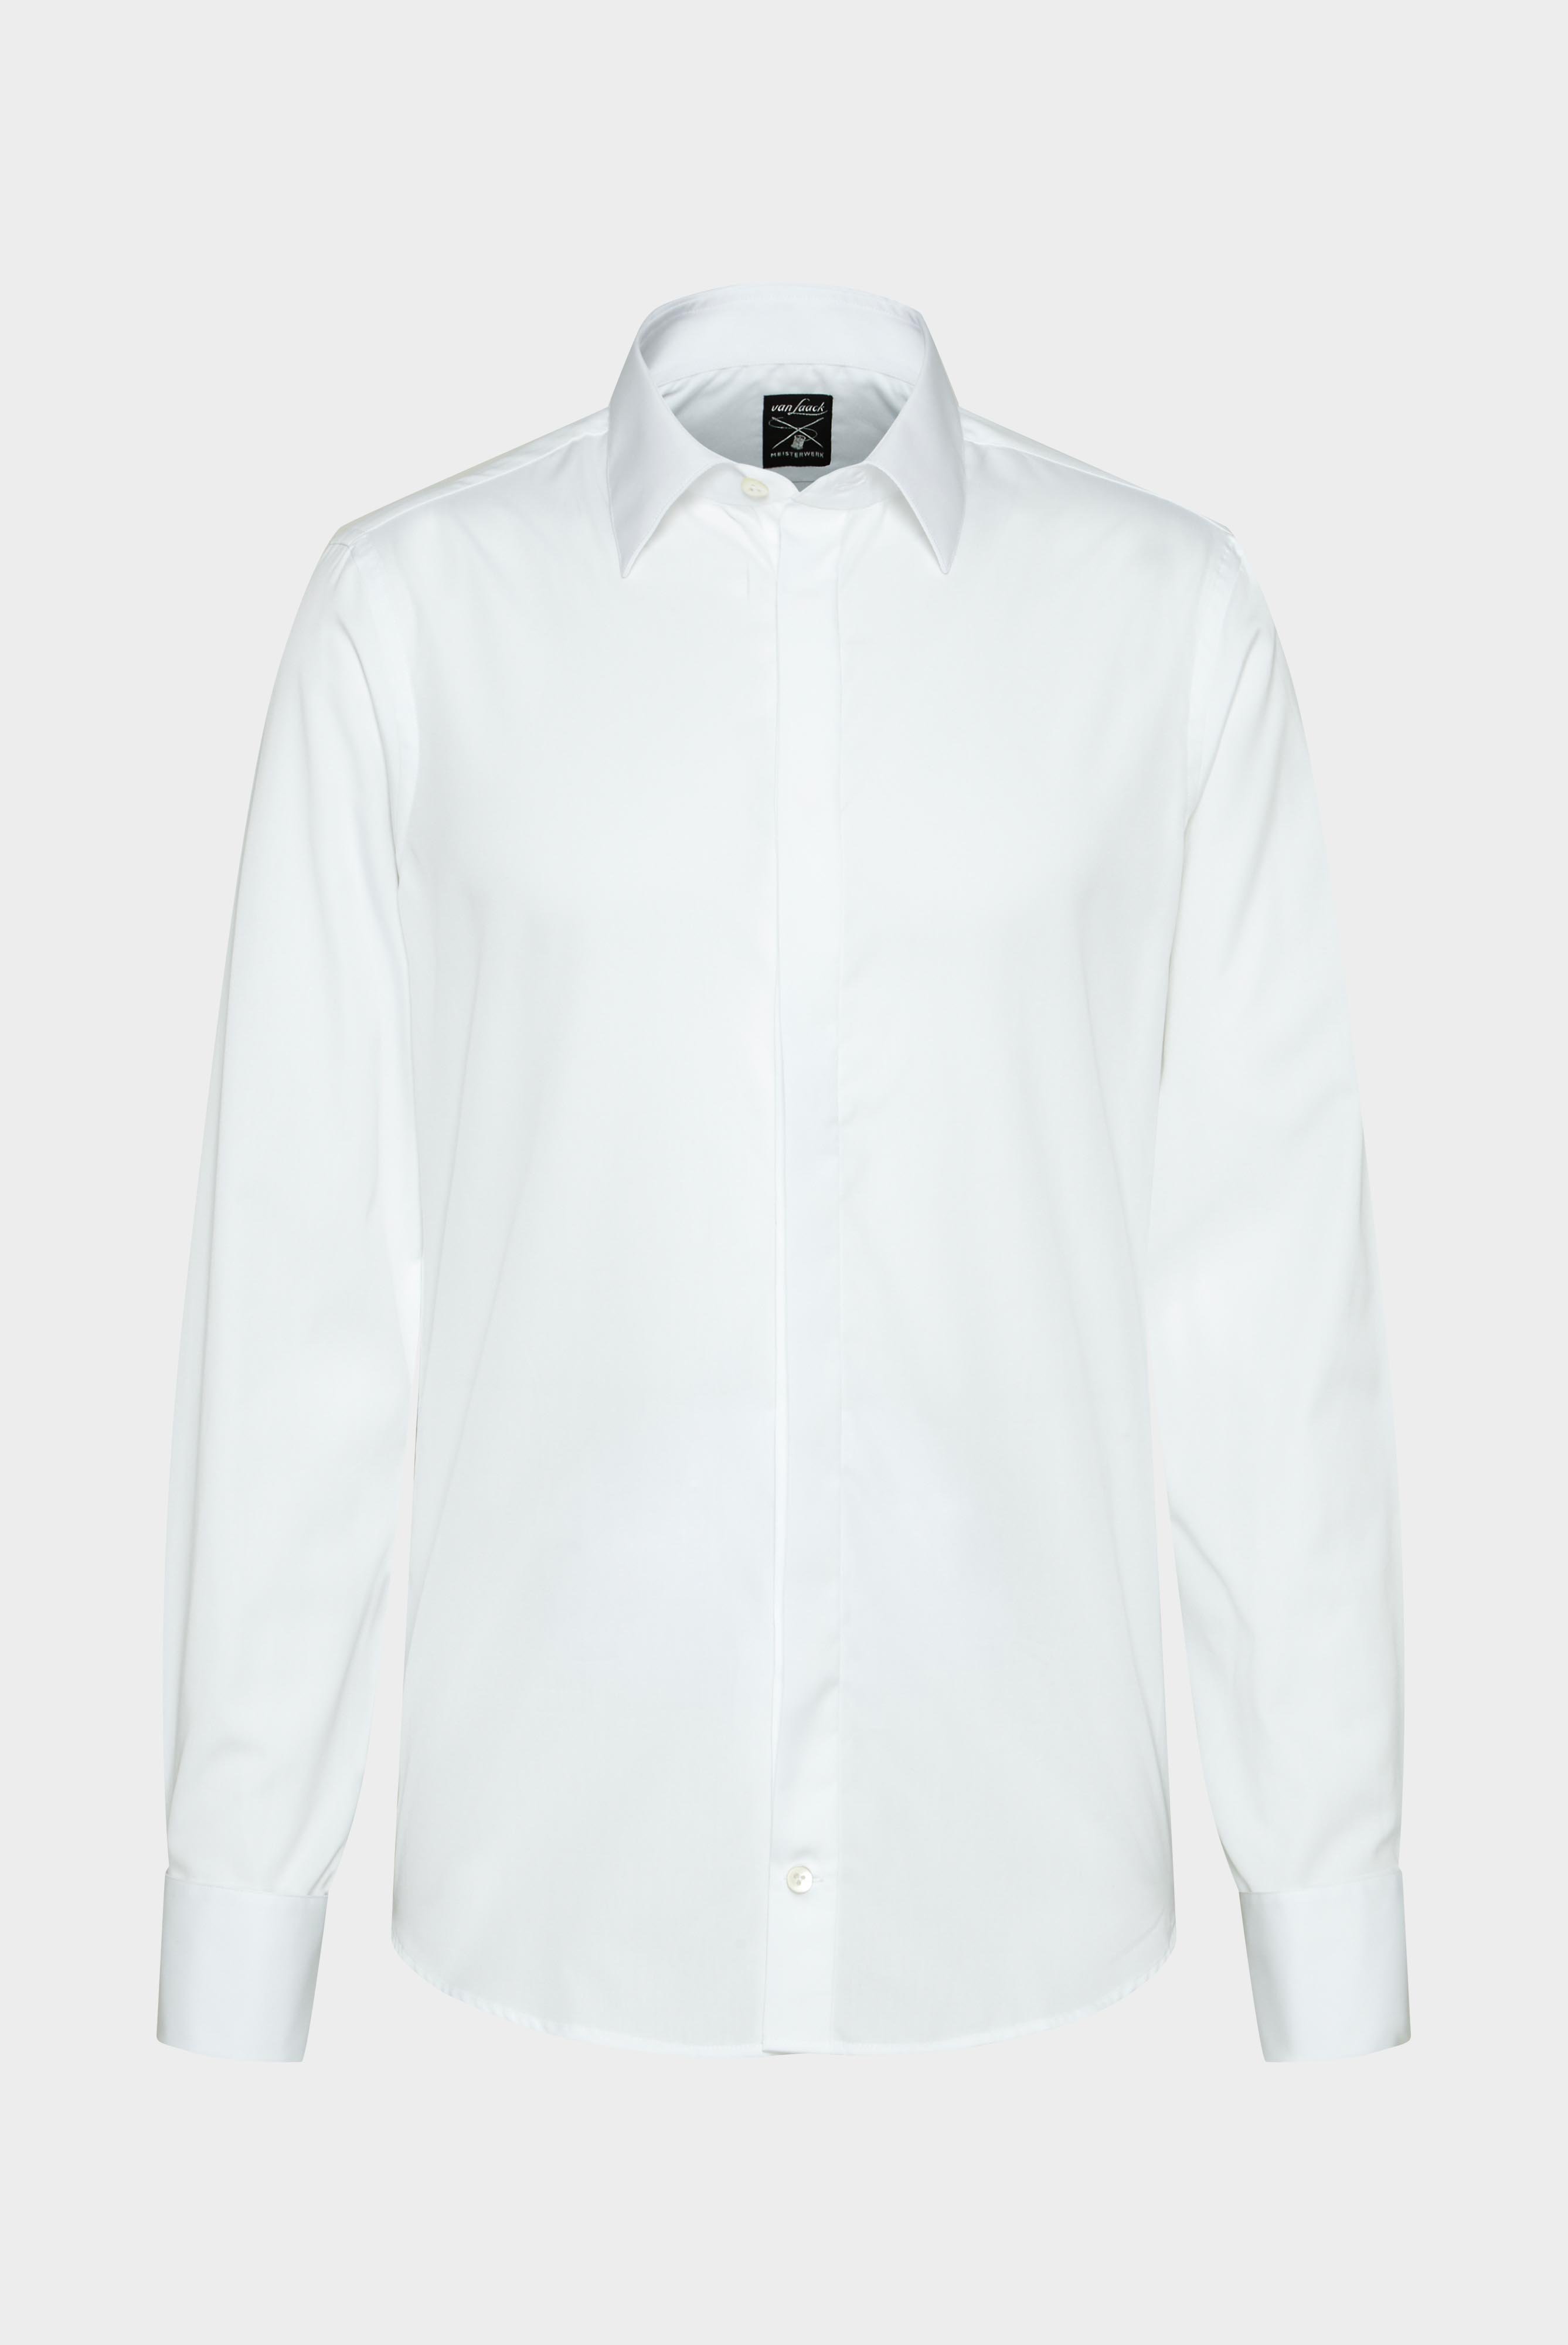 Festliche Hemden+Poplin Double Cuff Shirt+20.2063.NV.130648.000.37